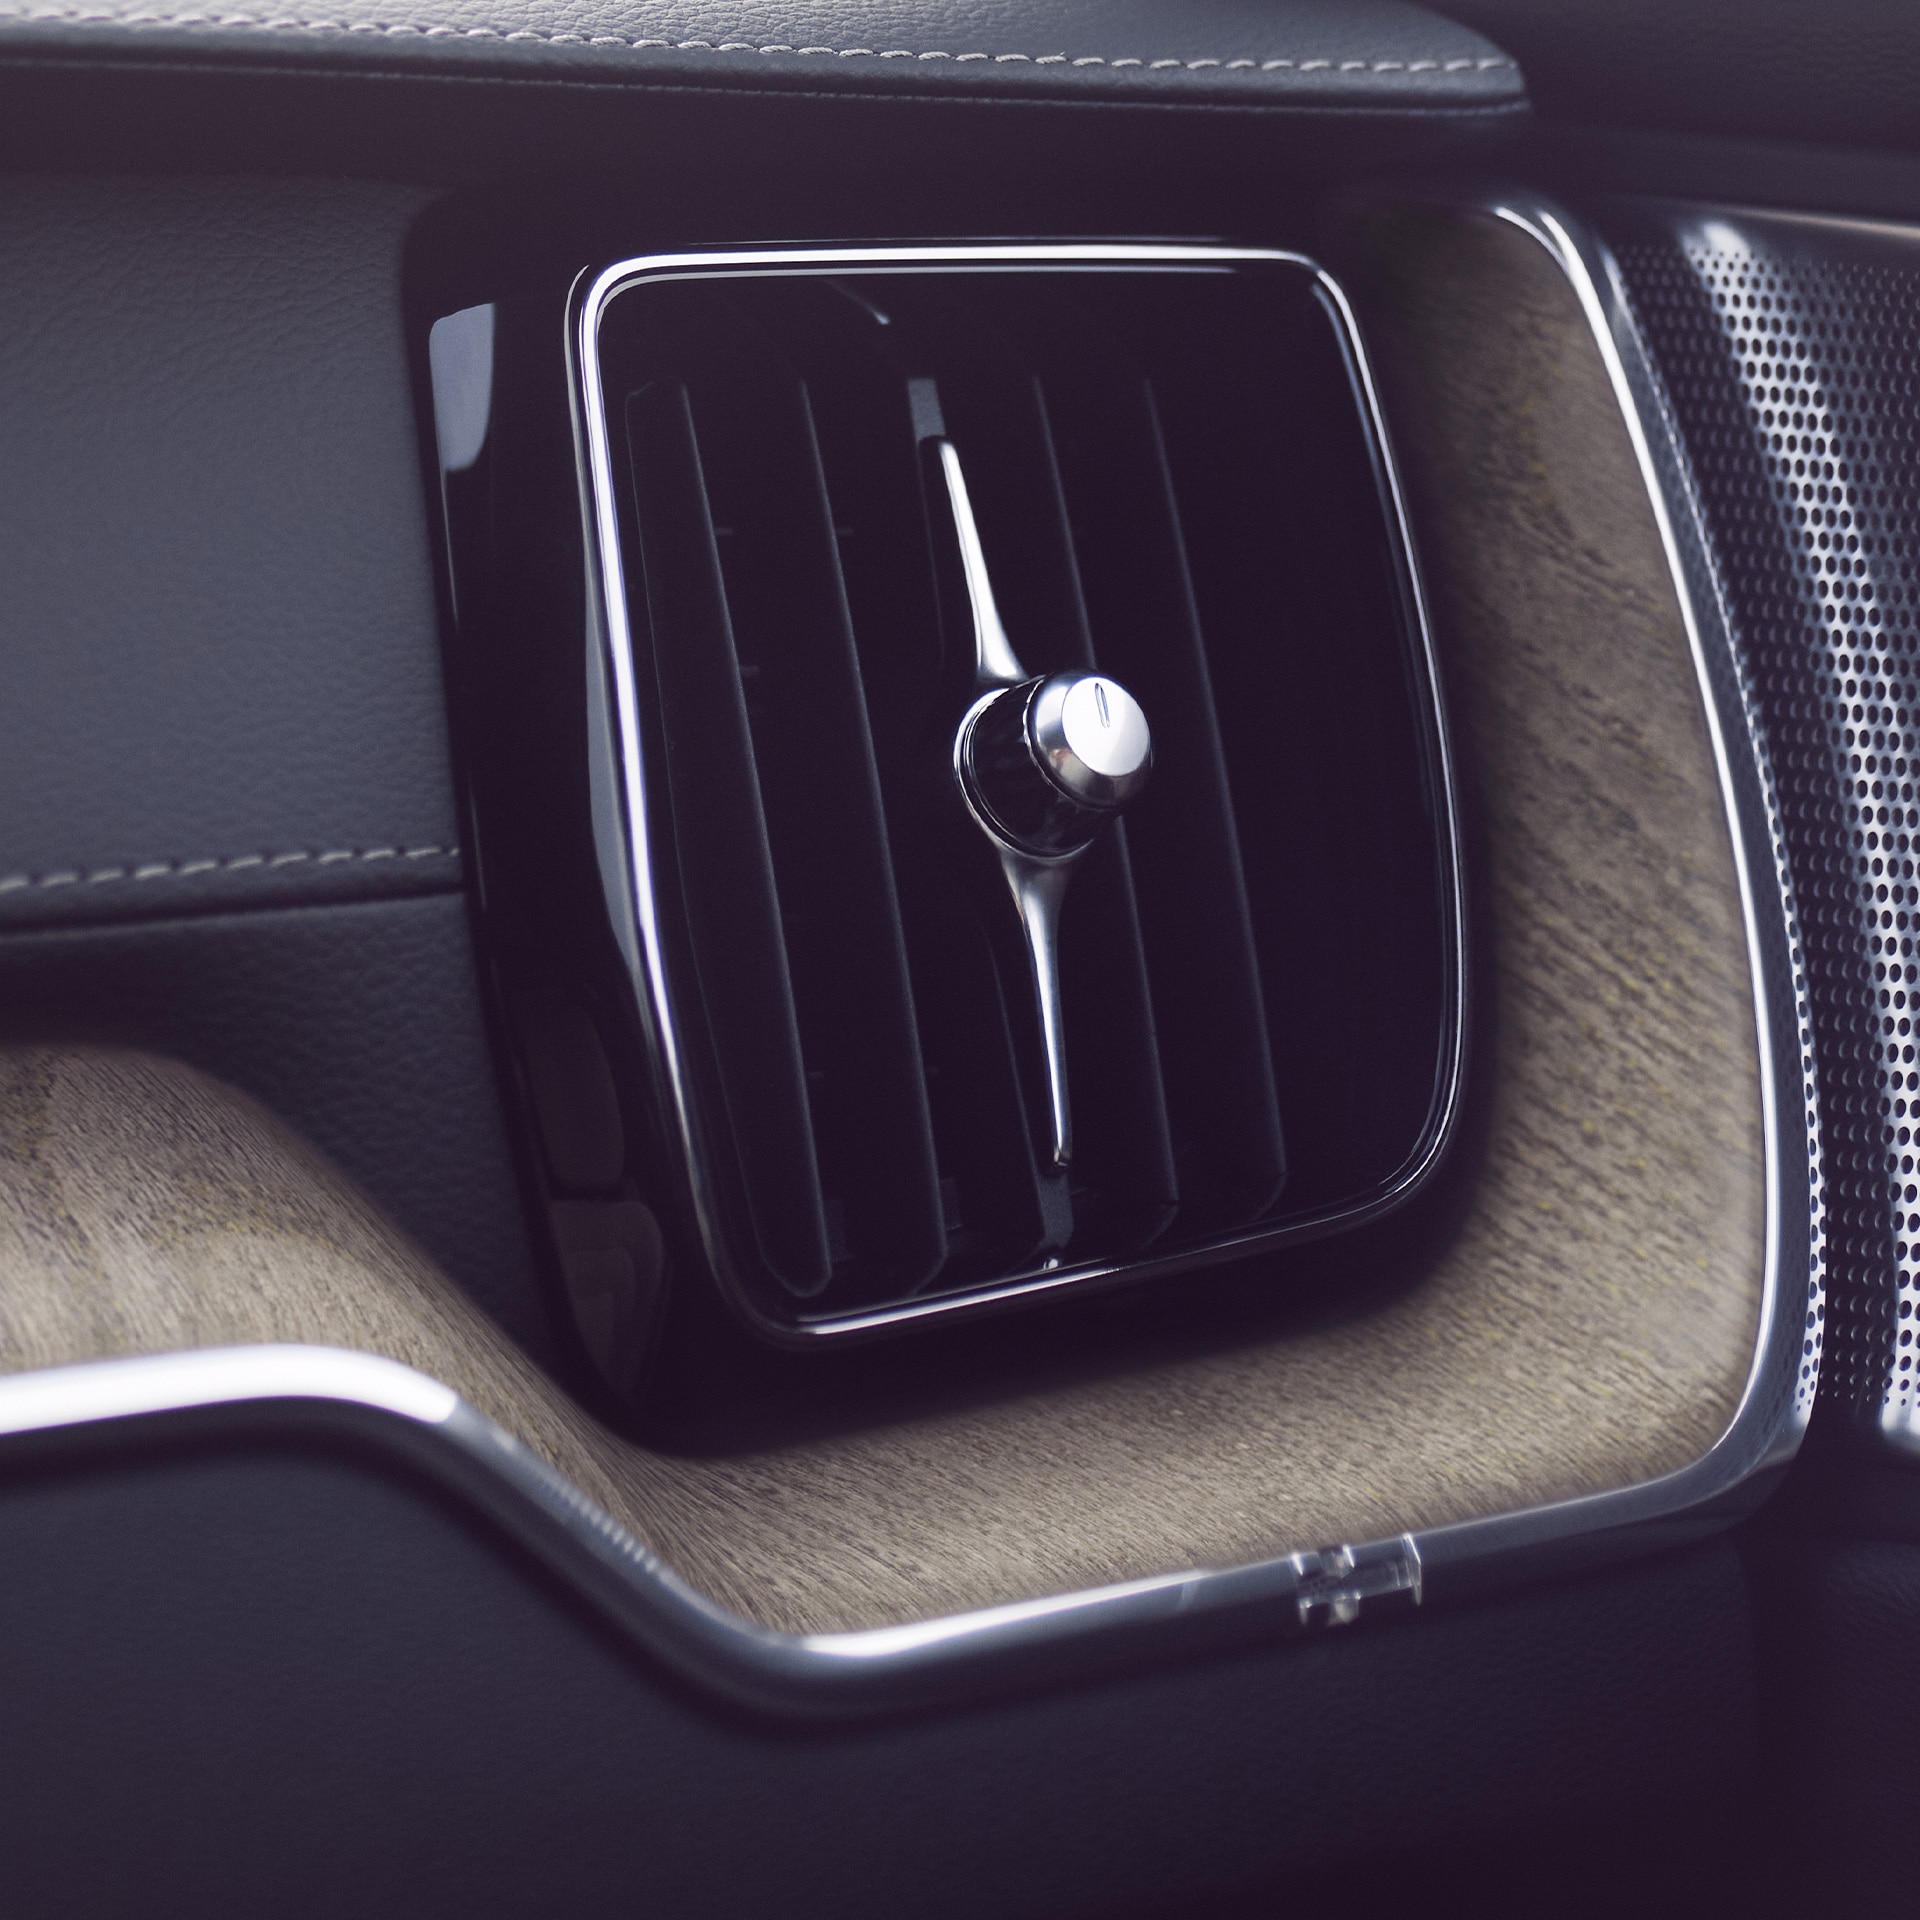 Volvo XC60 搭載世界一流的 AP 高效複合清淨科技，能讓您和您的乘客享有更清新的空氣品質。